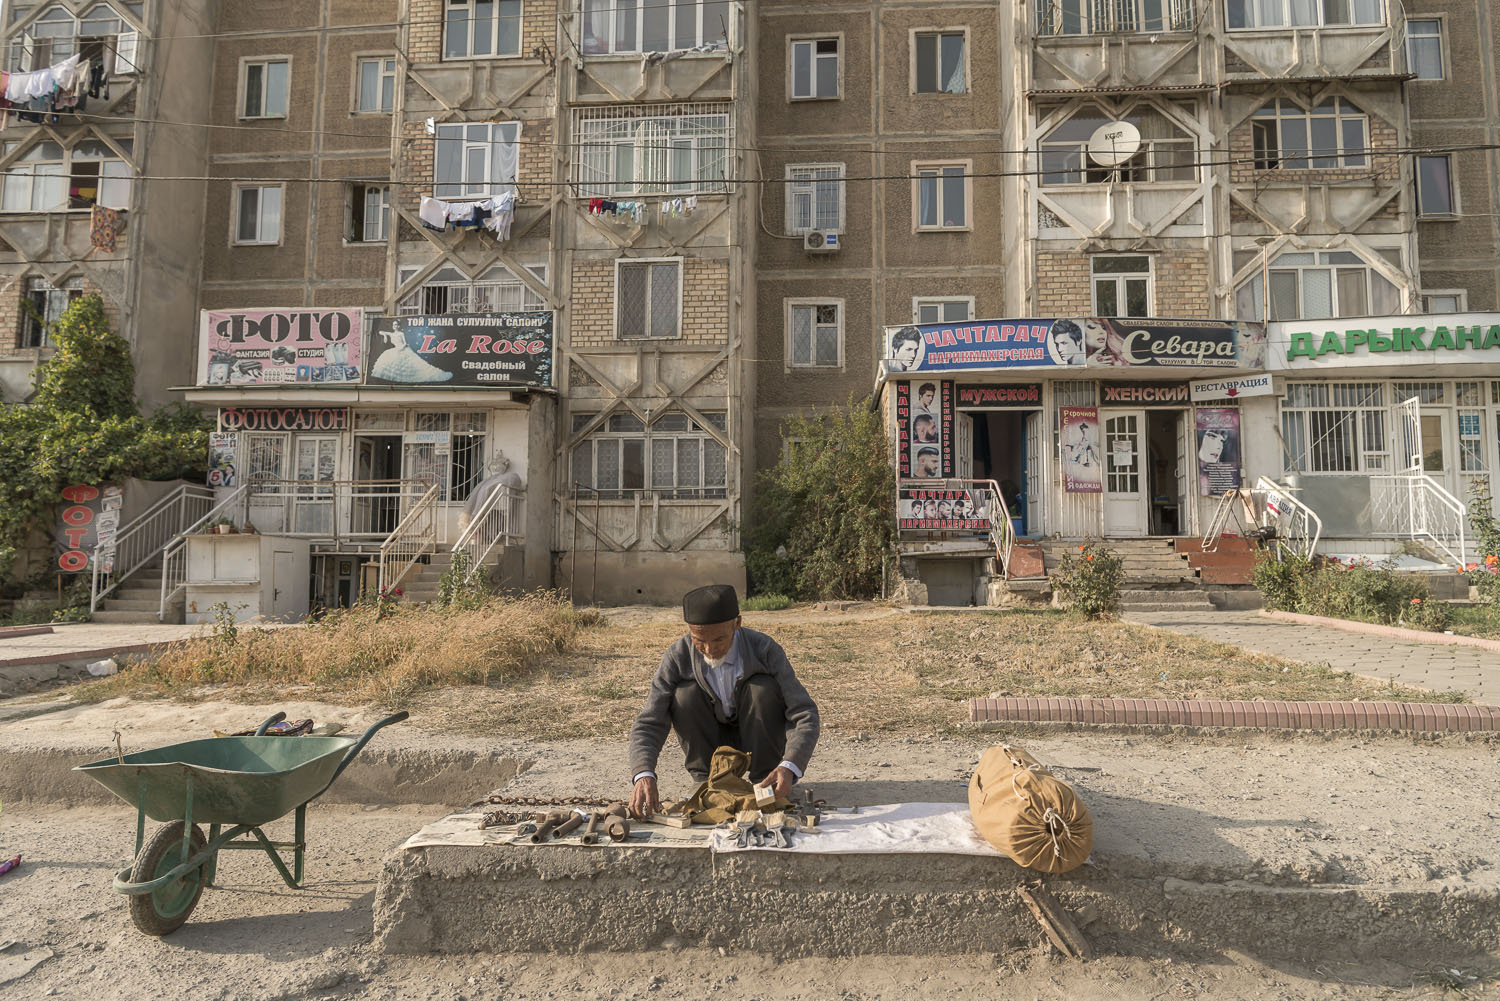 tools-roadside-stalls-market-kyrgyzstan-travel-photography-groceries-osh.jpg